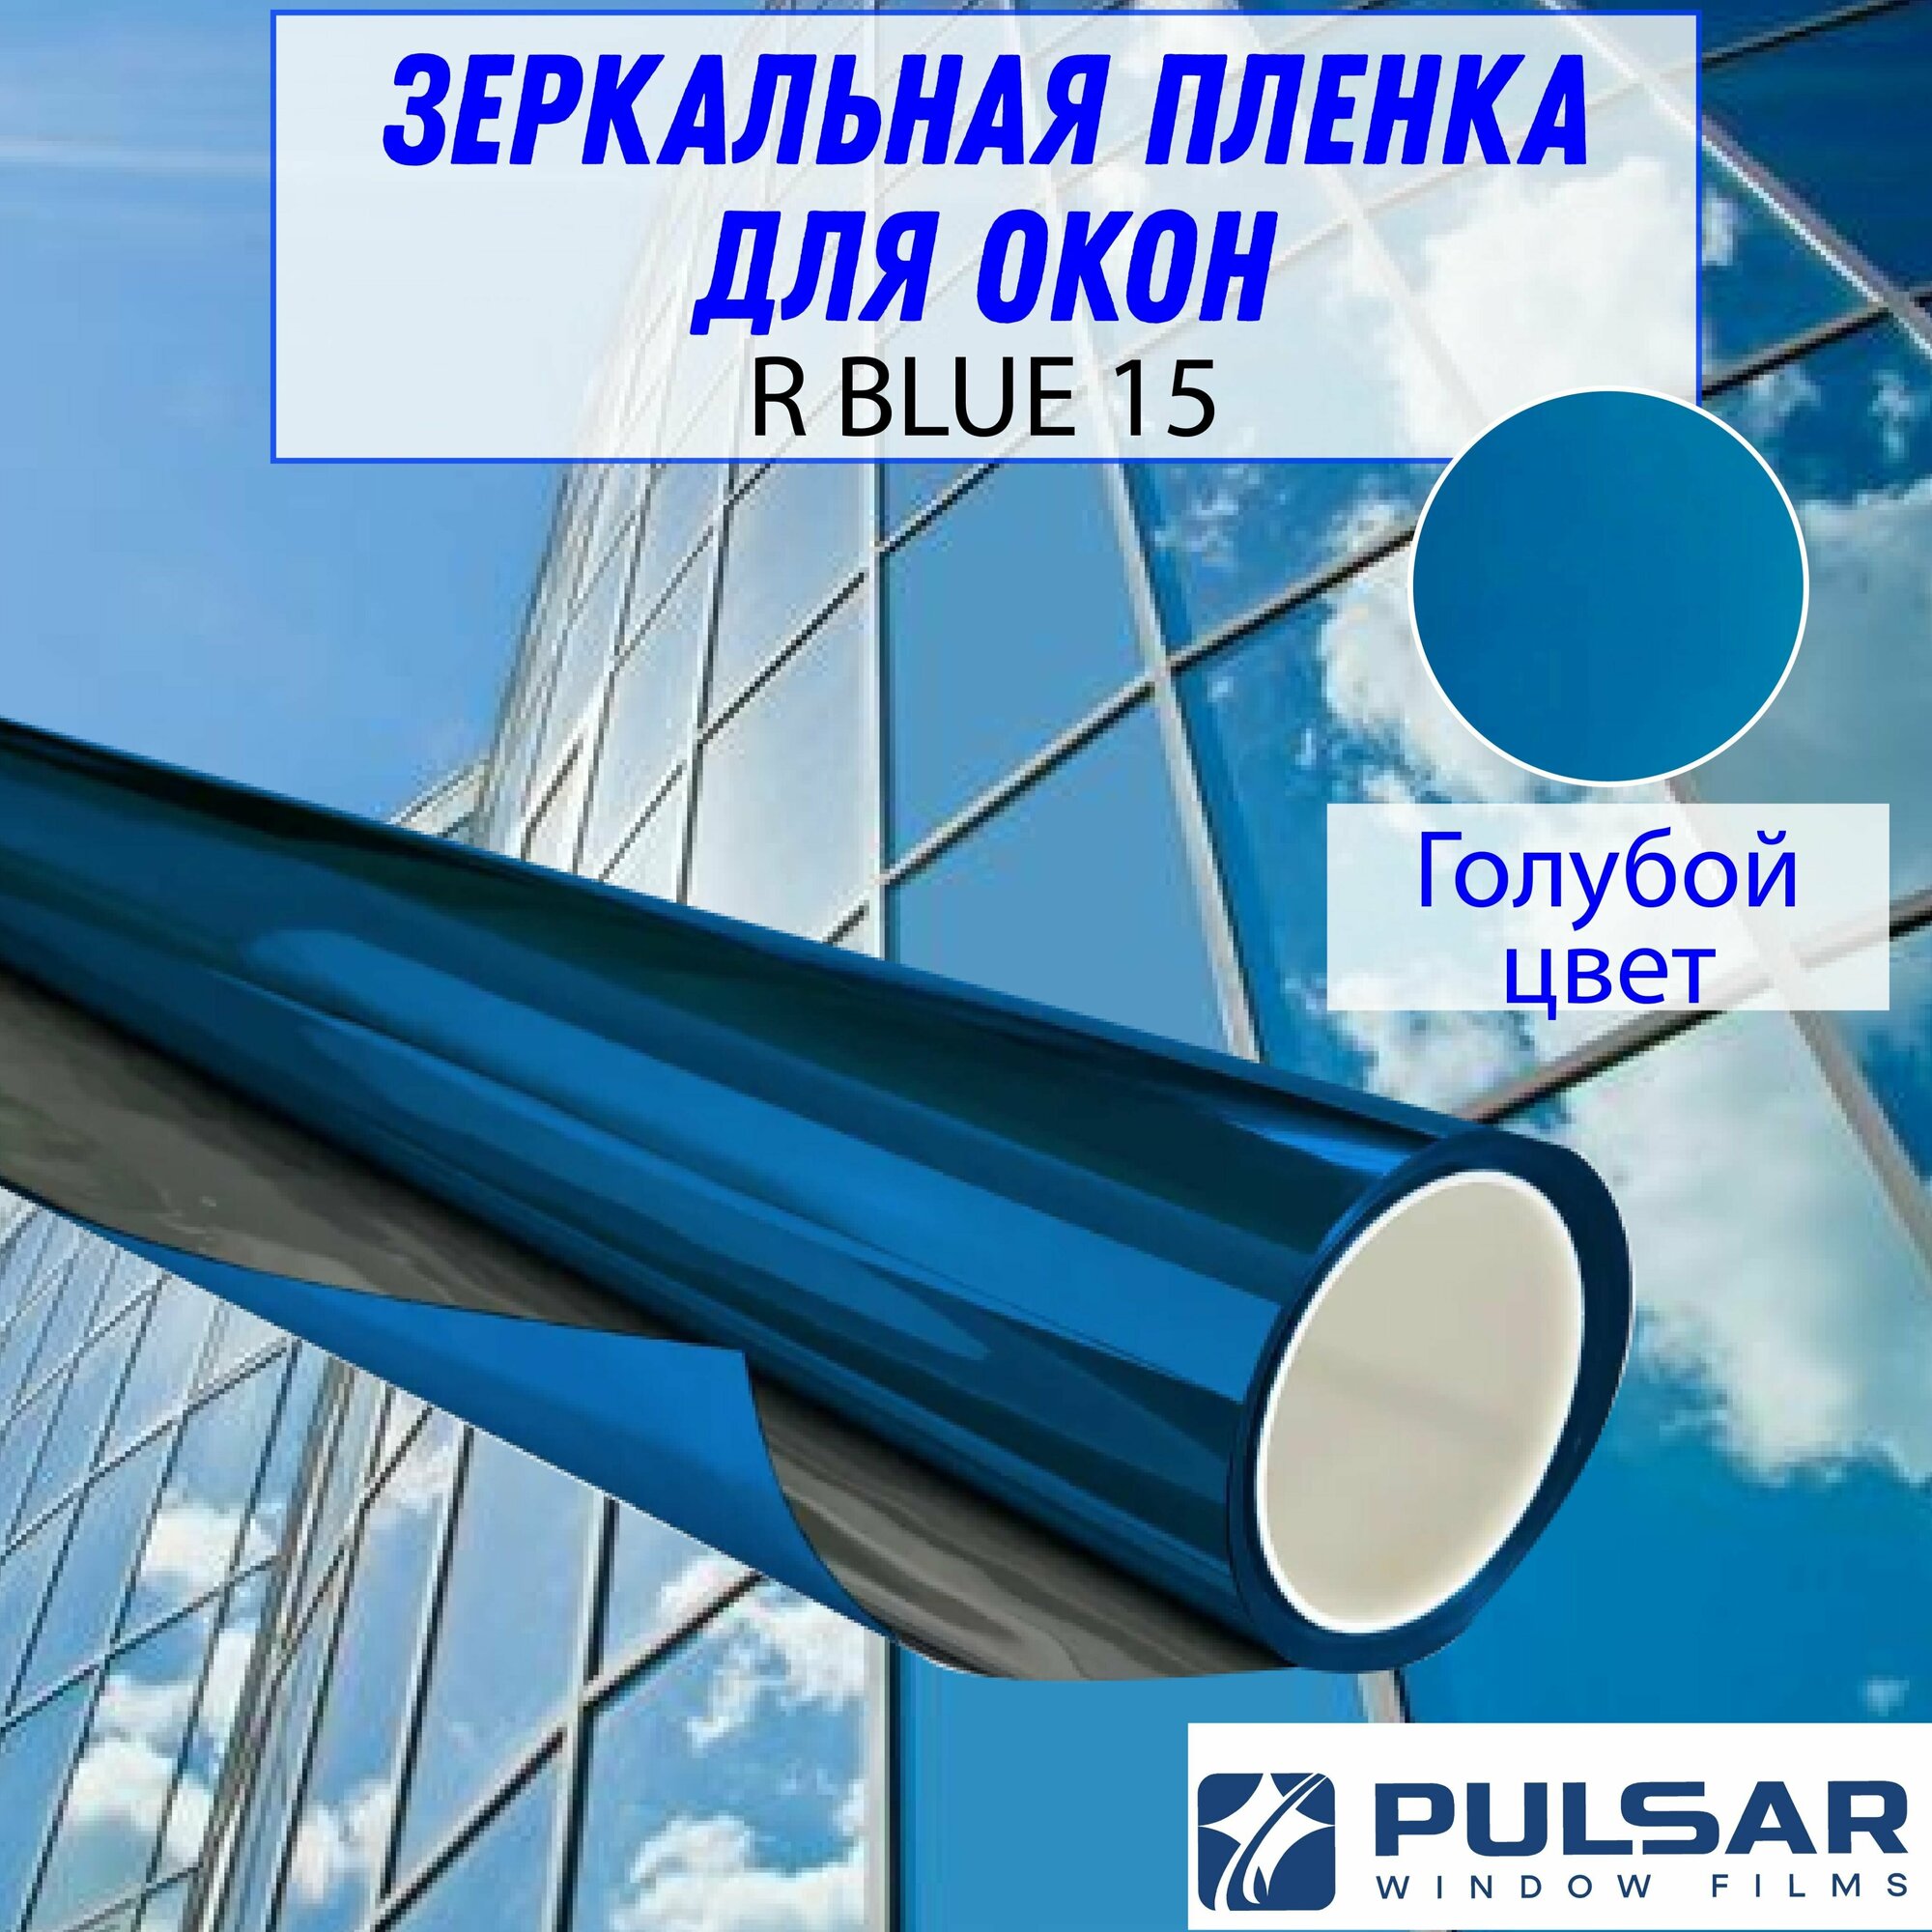 Пленка солнцезащитная для окон PULSAR R BLUE 15, Голубой цвет (Размер 1,0Х1.5 метра)